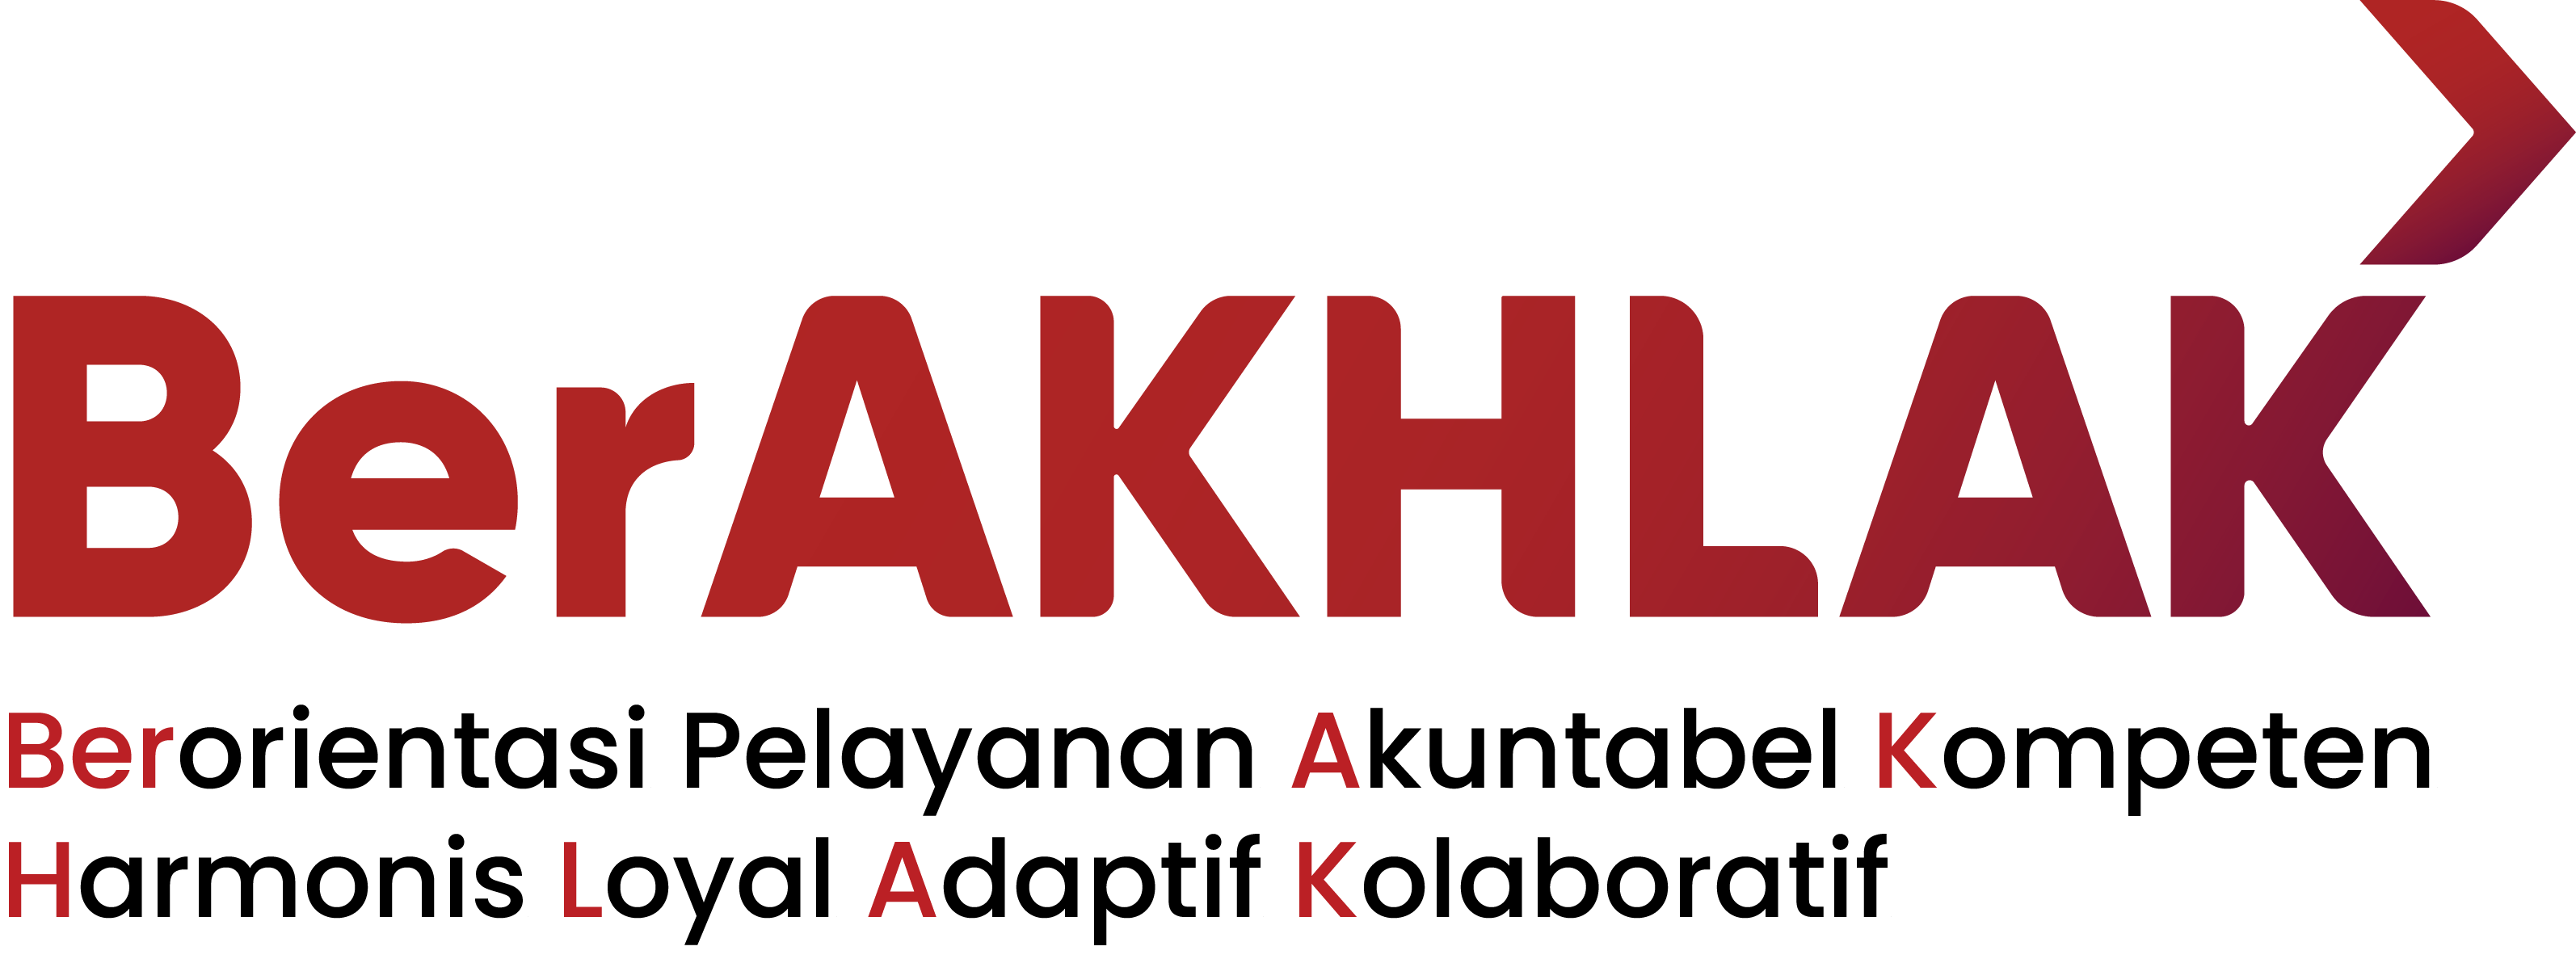 Logo_BerAKHLAK